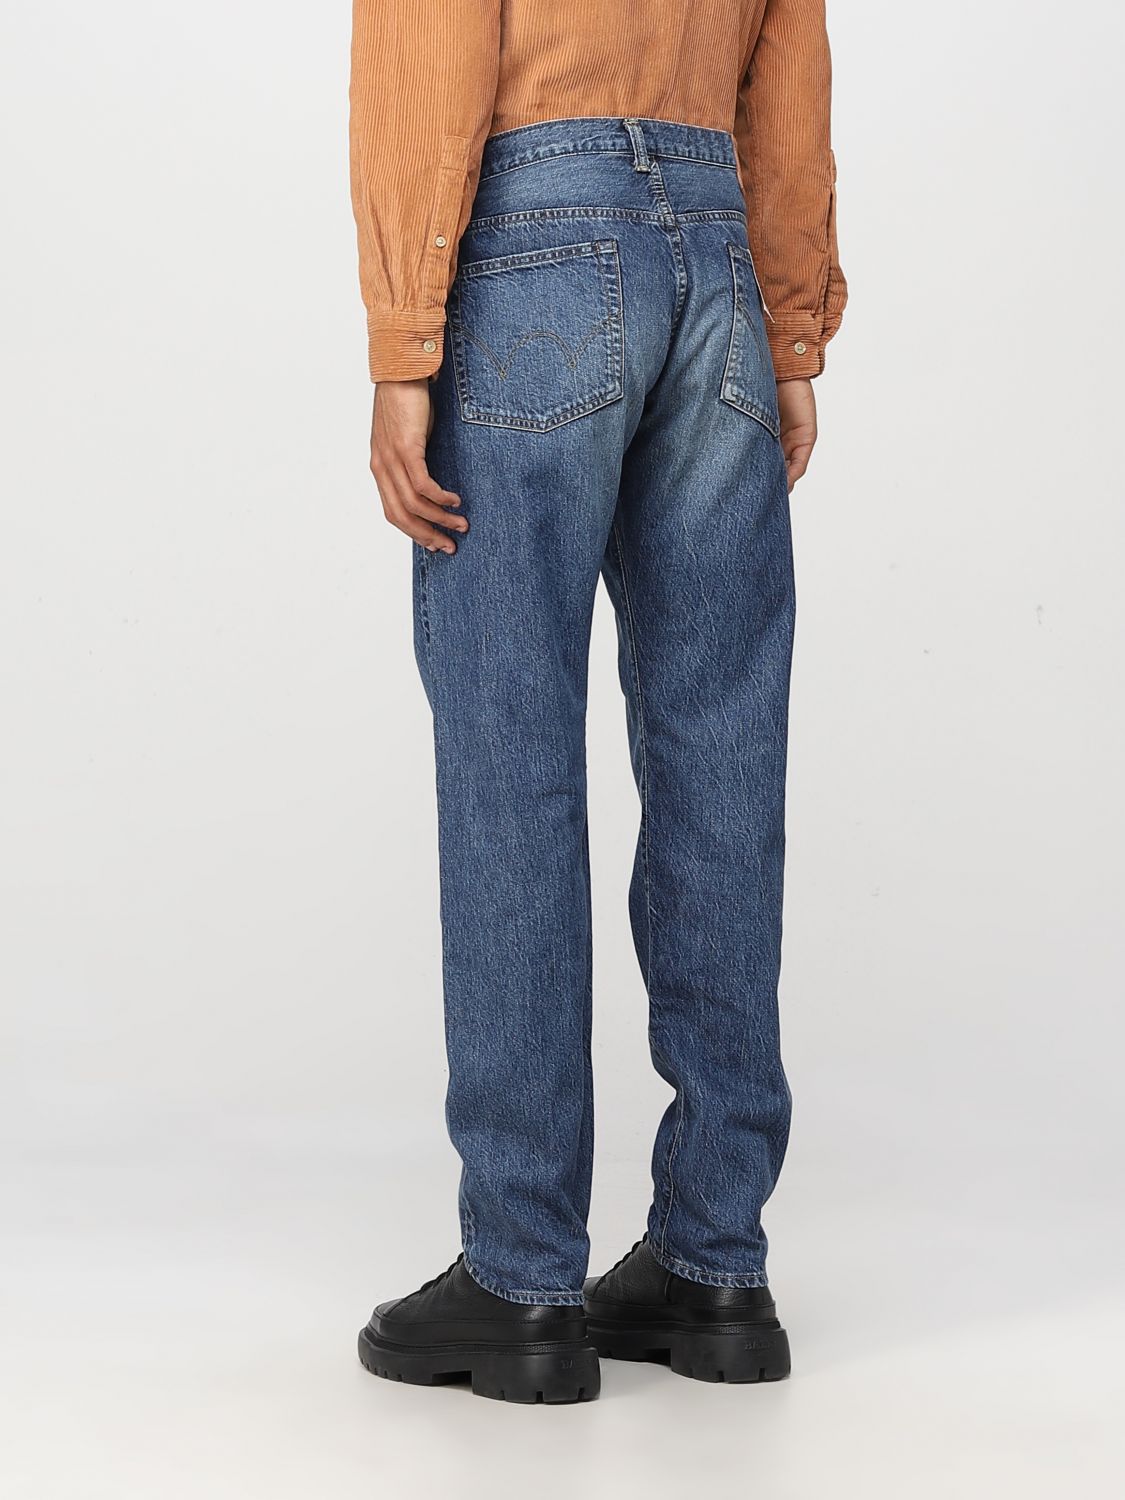 Edwin Outlet: jeans for man - Denim | Edwin jeans I029404 online on ...